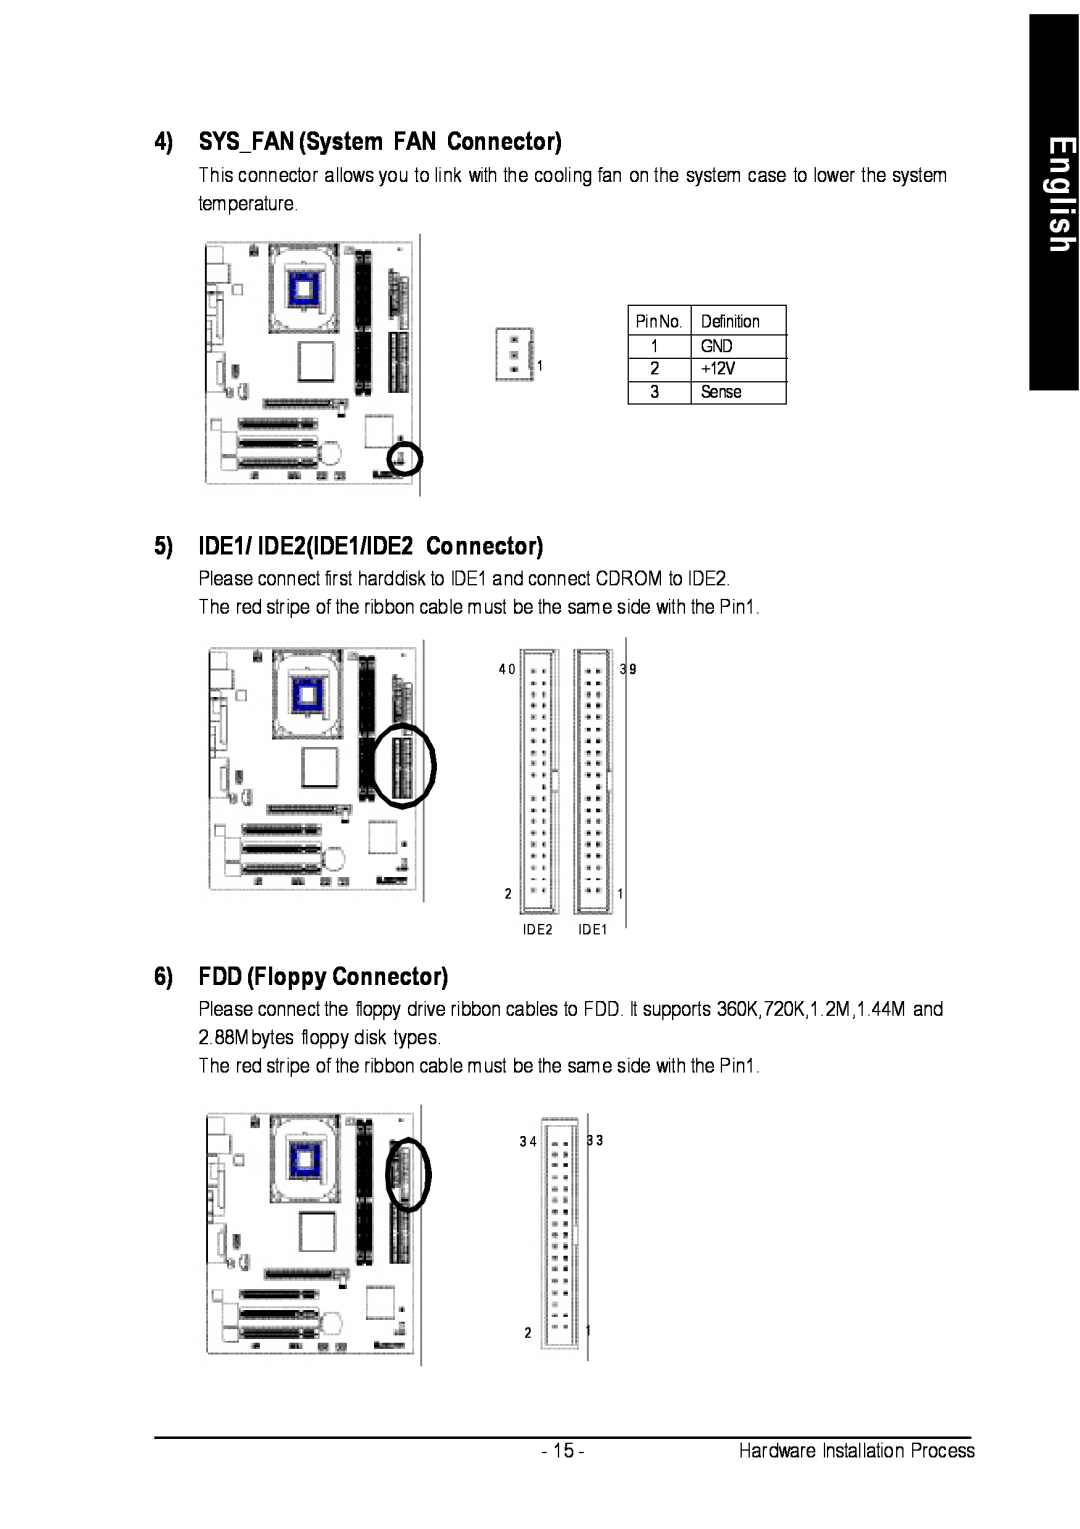 Intel 8S651M-RZ-C English, SYSFAN System FAN Connector, 5 IDE1/ IDE2IDE1/IDE2 Connector, FDD Floppy Connector 